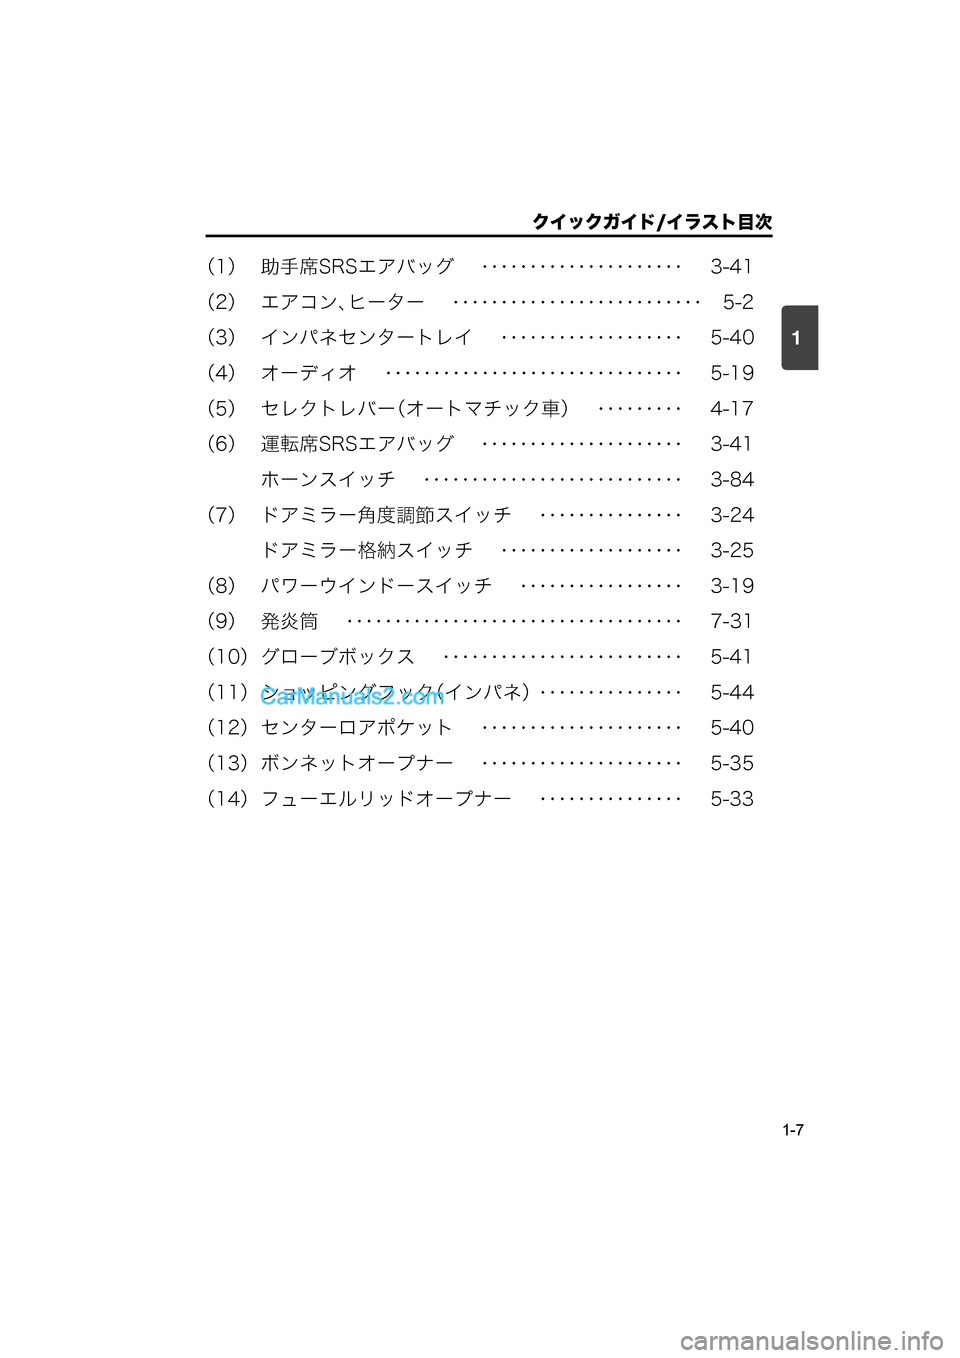 MAZDA MODEL CARROL 2015  取扱説明書 (キャロル) (in Japanese) 1
クイックガイド/イラスト目次
1-7
（1） 助手席SRSエアバッグ　 ･････････････････････ 　3-41
（2） エアコン、ヒーター　 ･